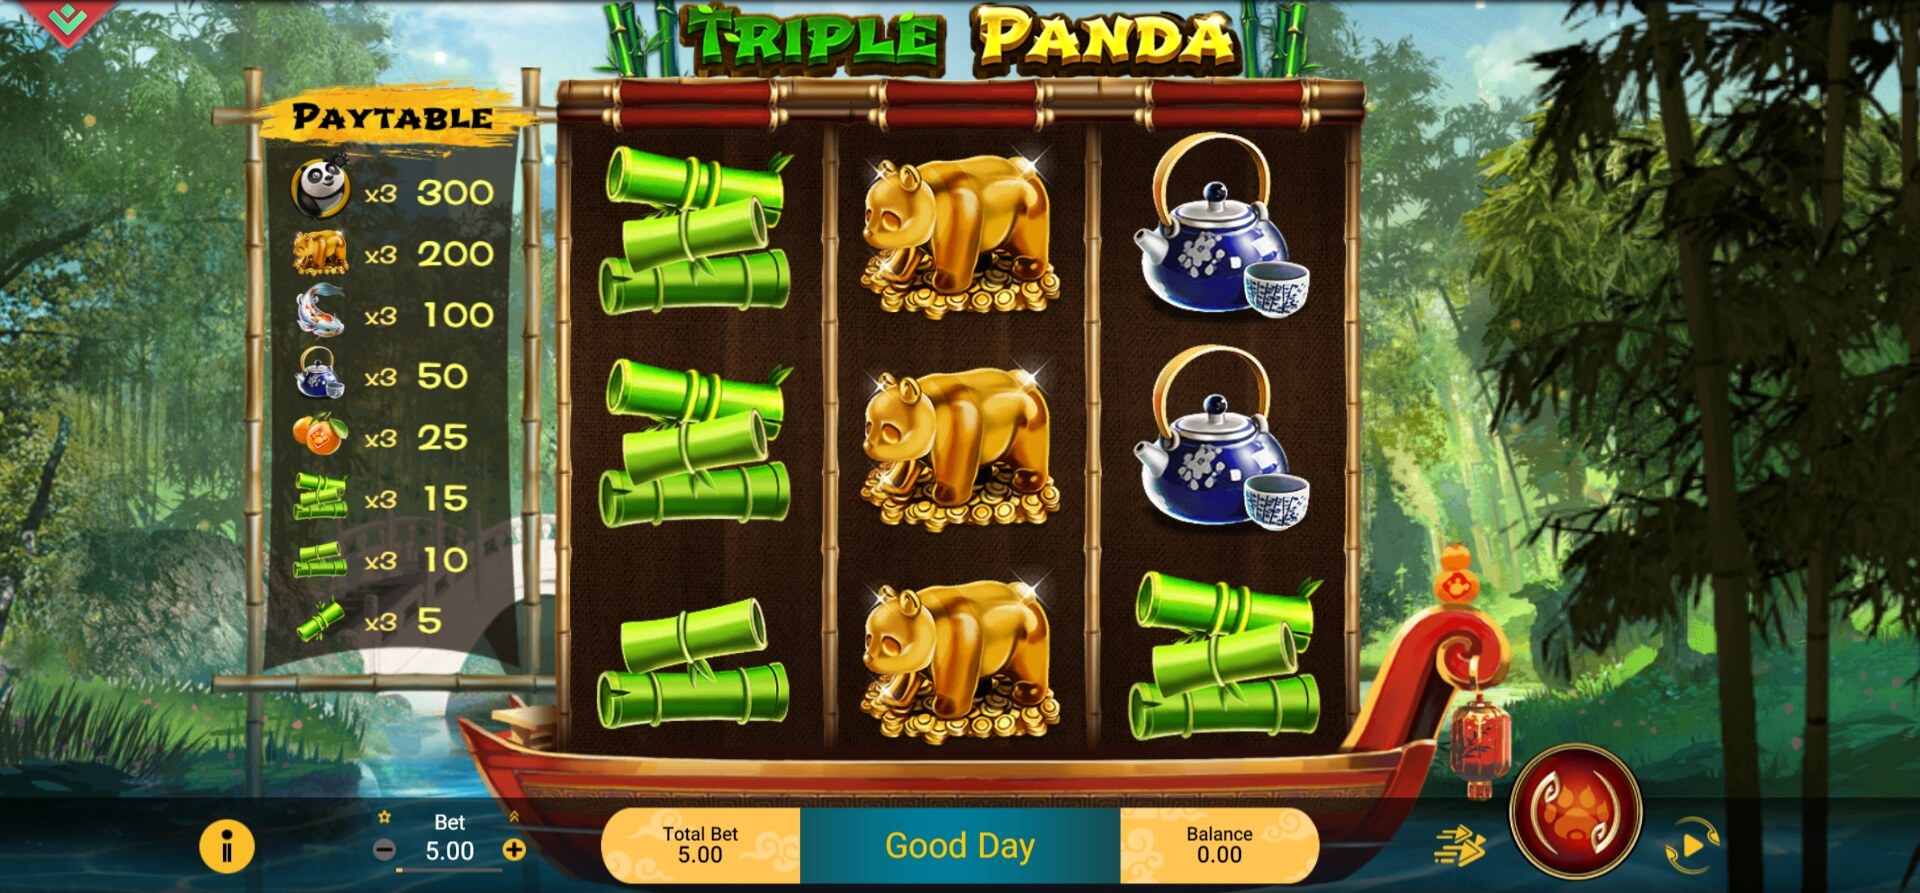 Triple Panda Manna Play ทางเข้า Superslot Wallet